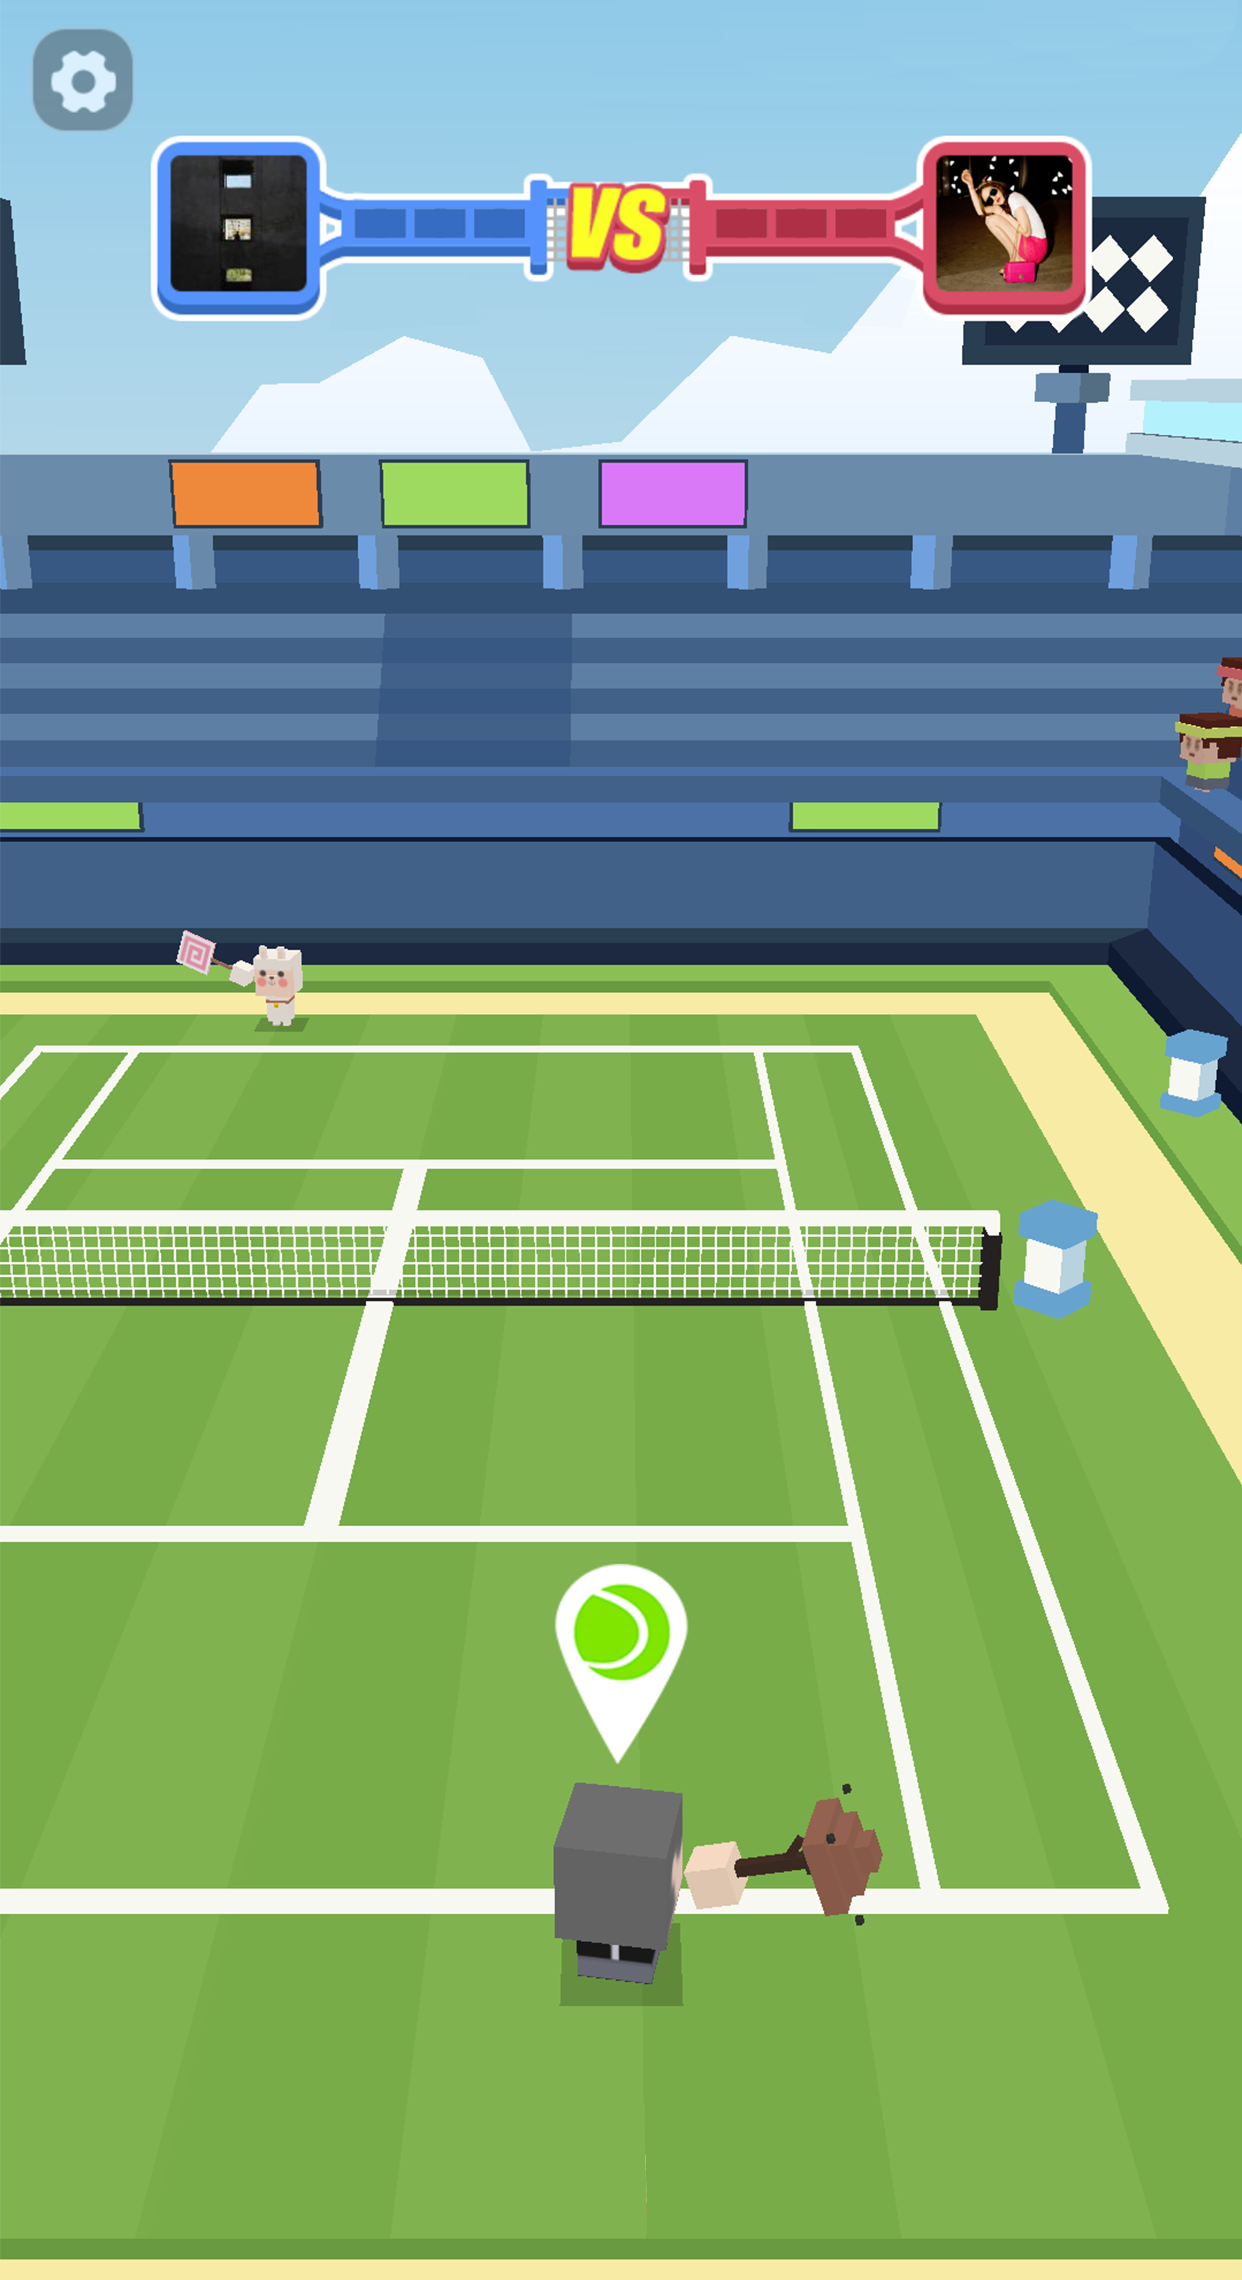 Screenshot 1 of Mini-tennis 1.1